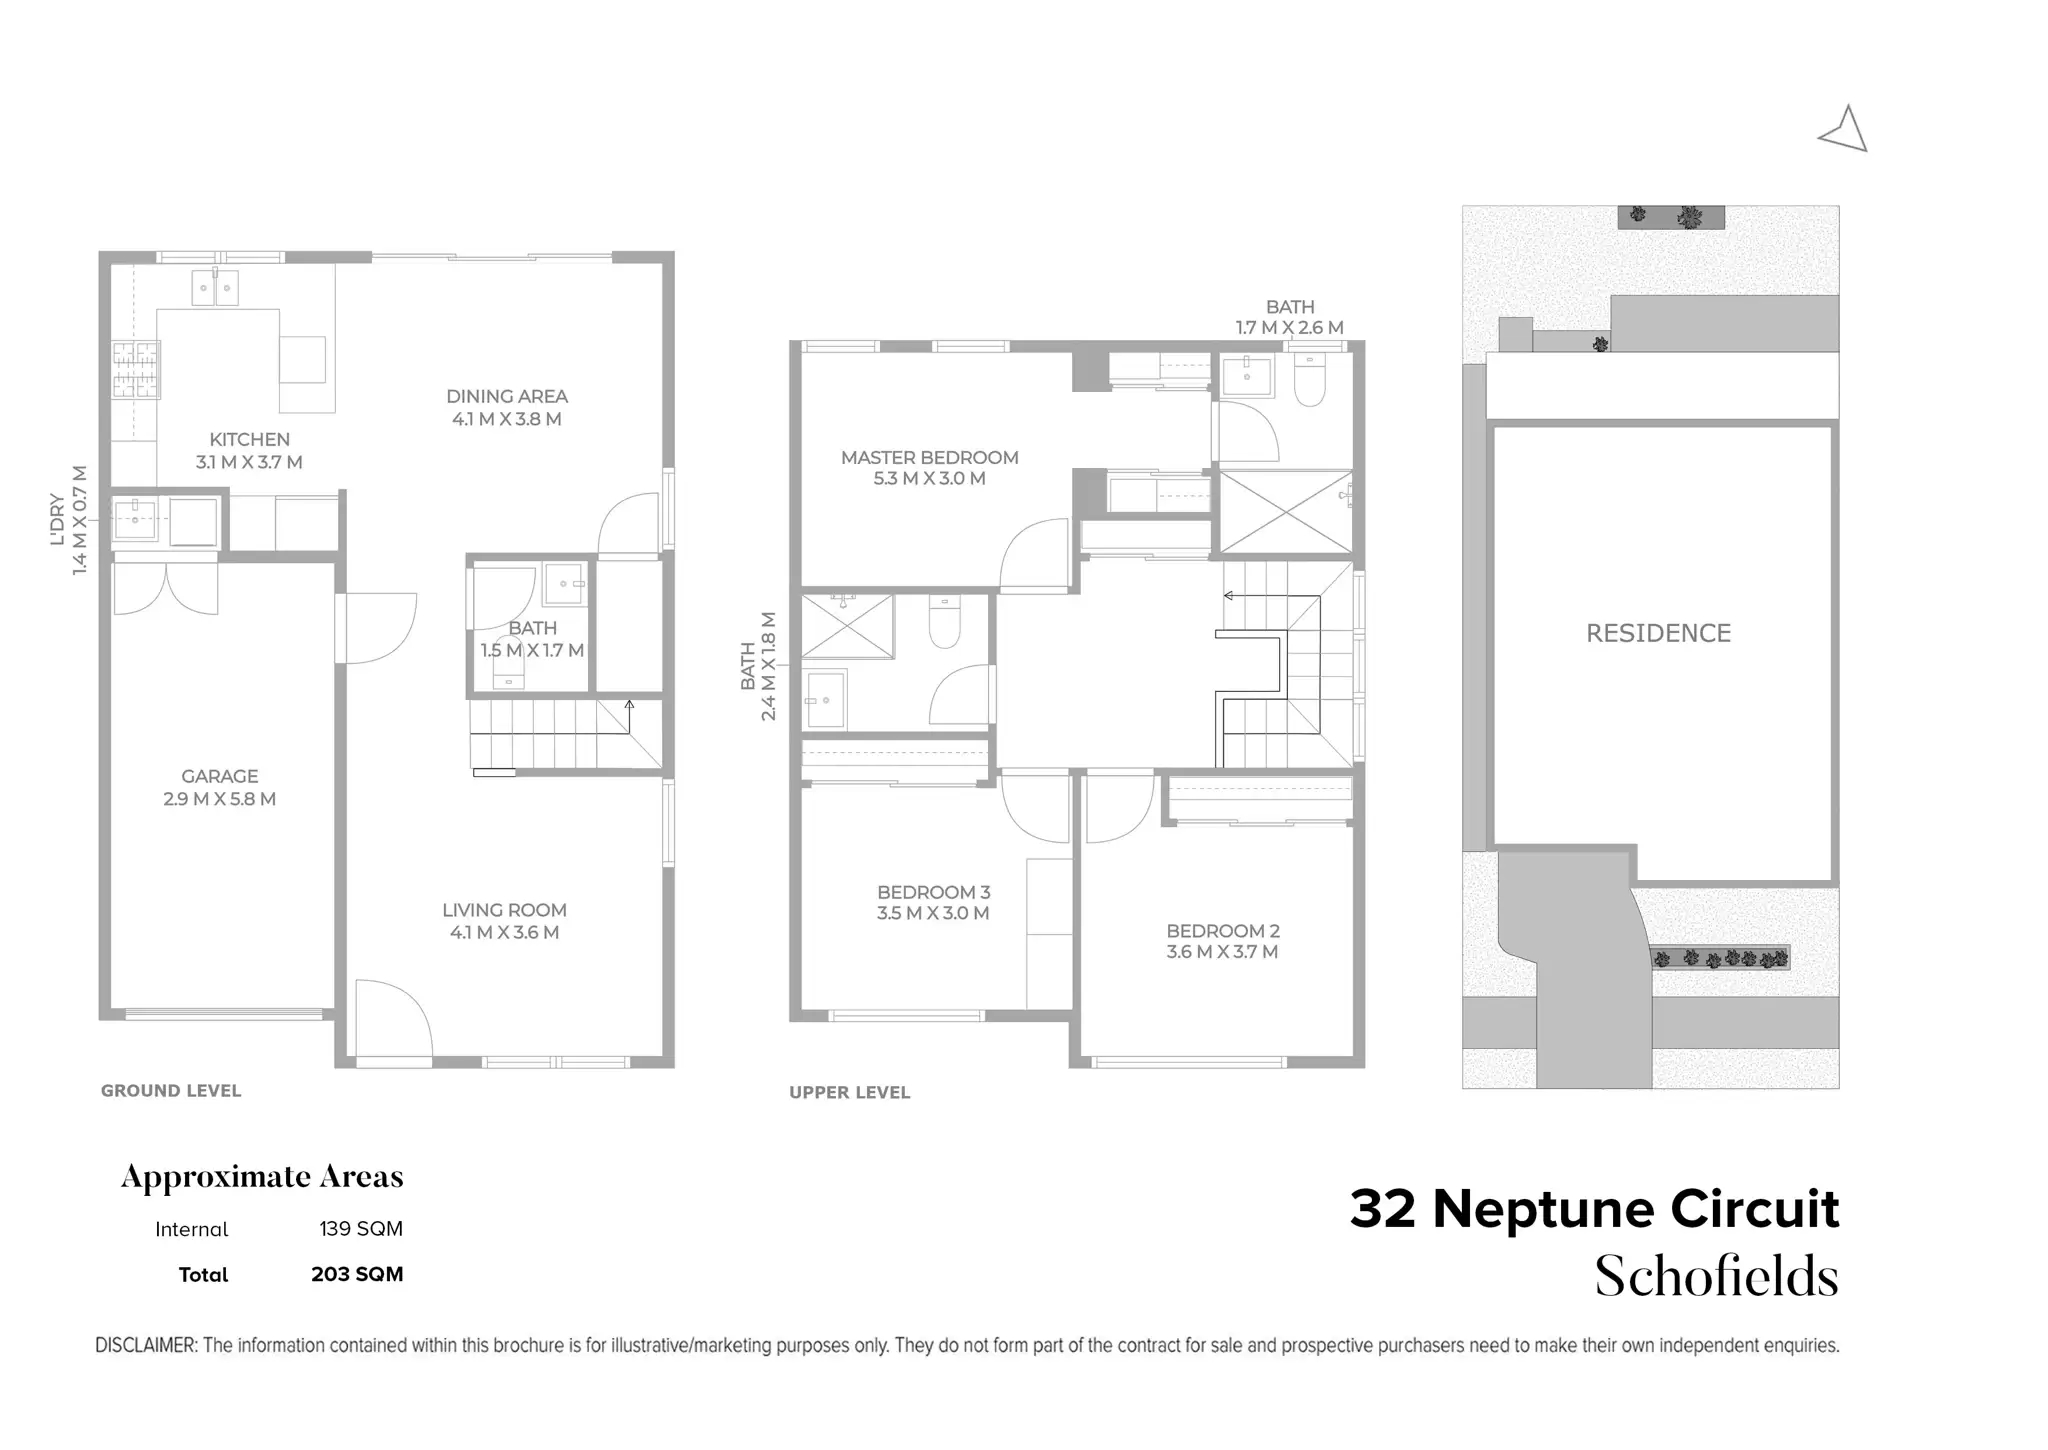 32 Neptune Circuit, Schofields Sold by Chidiac Realty - floorplan